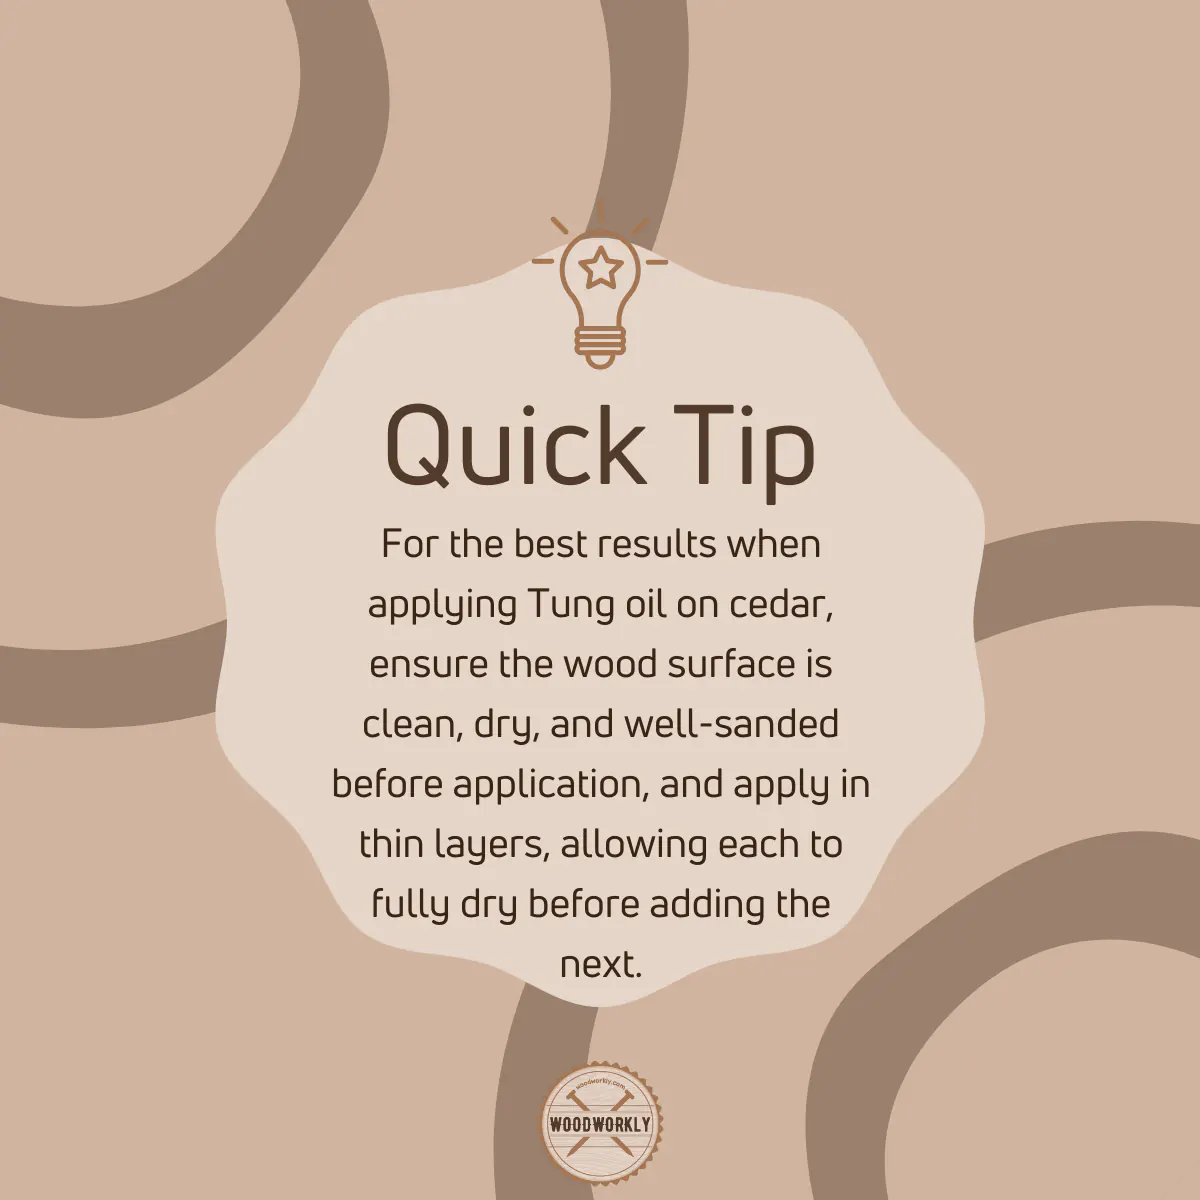 Tip for applying tung oil on cedar